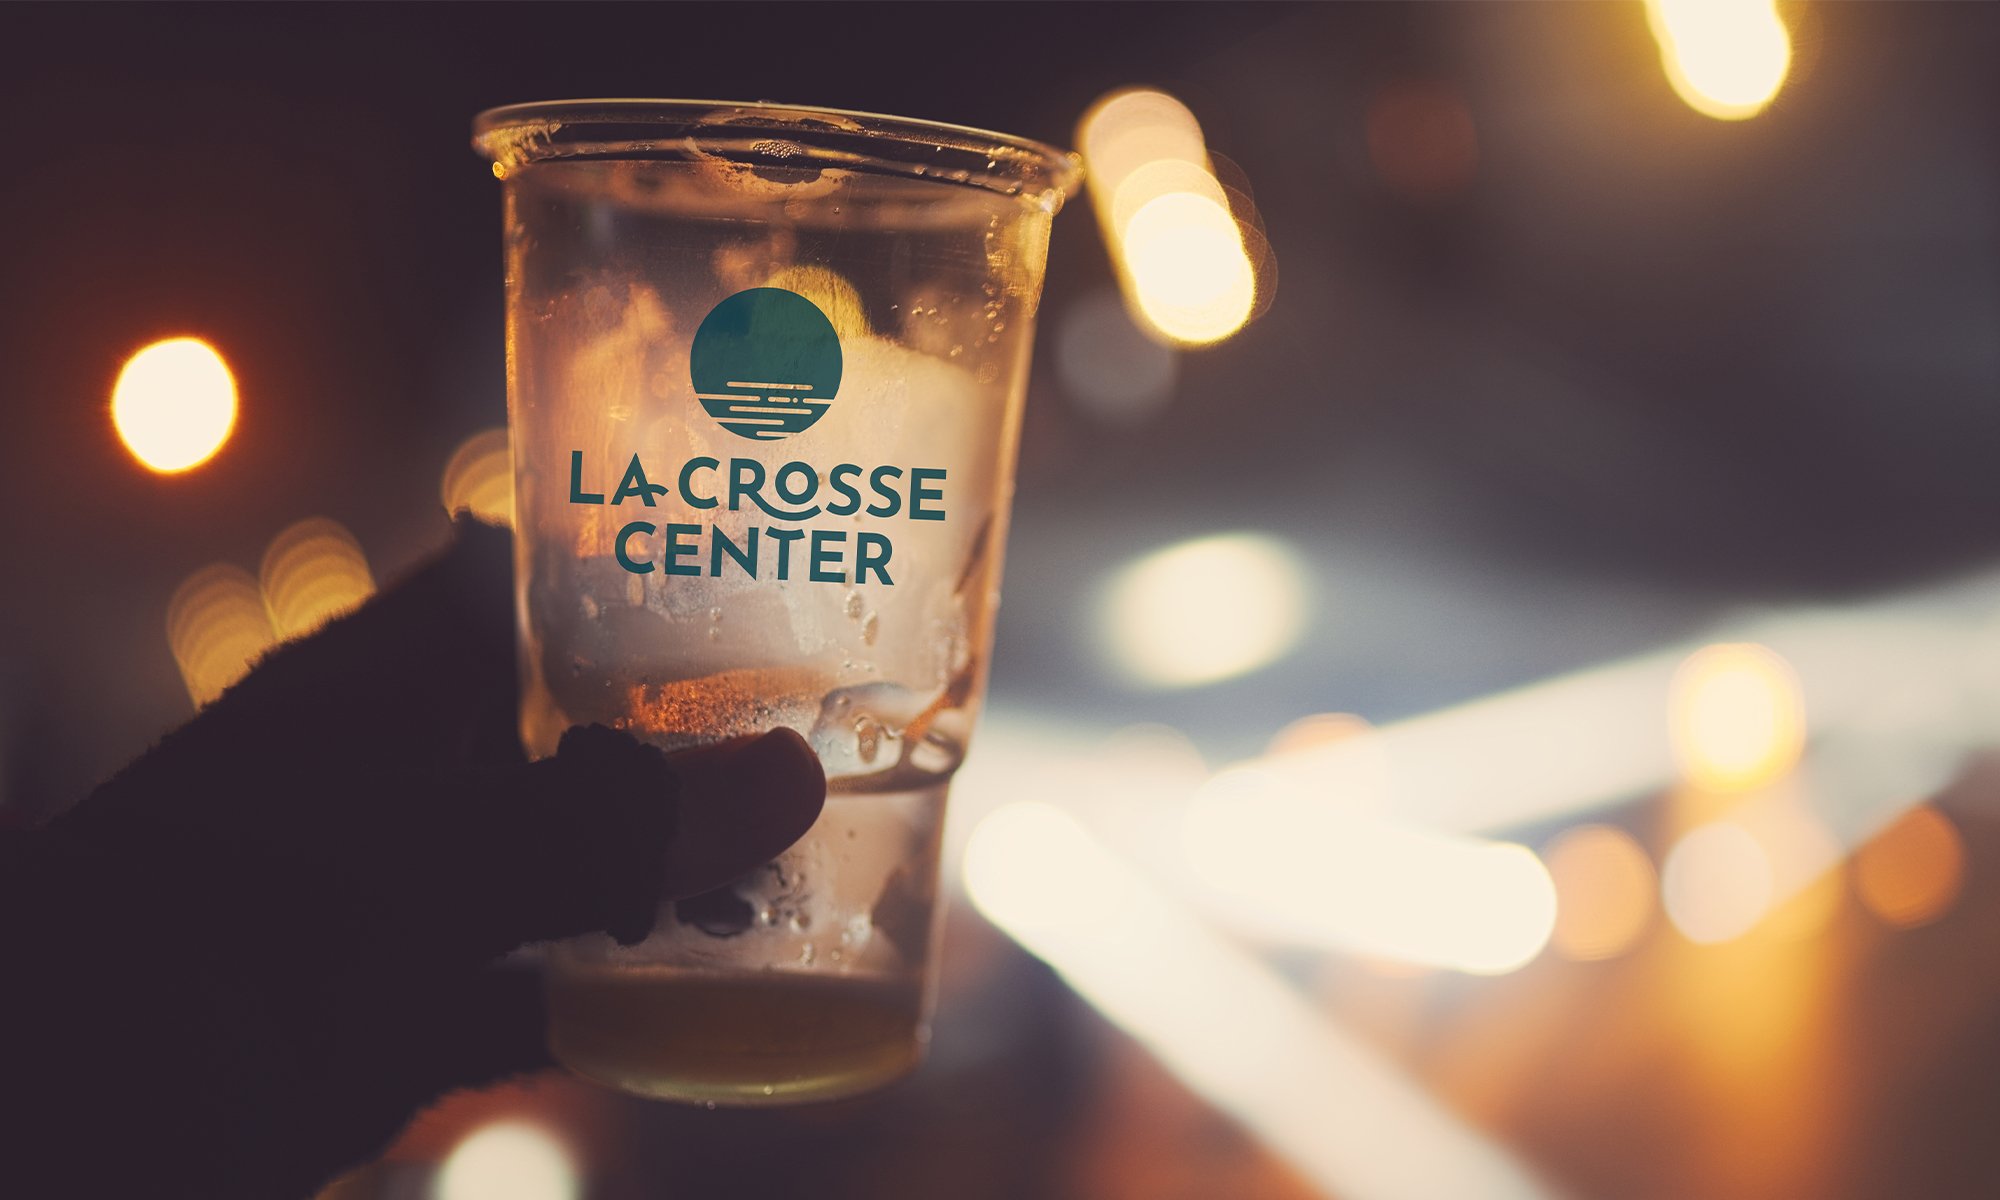 La Crosse Center branded cup